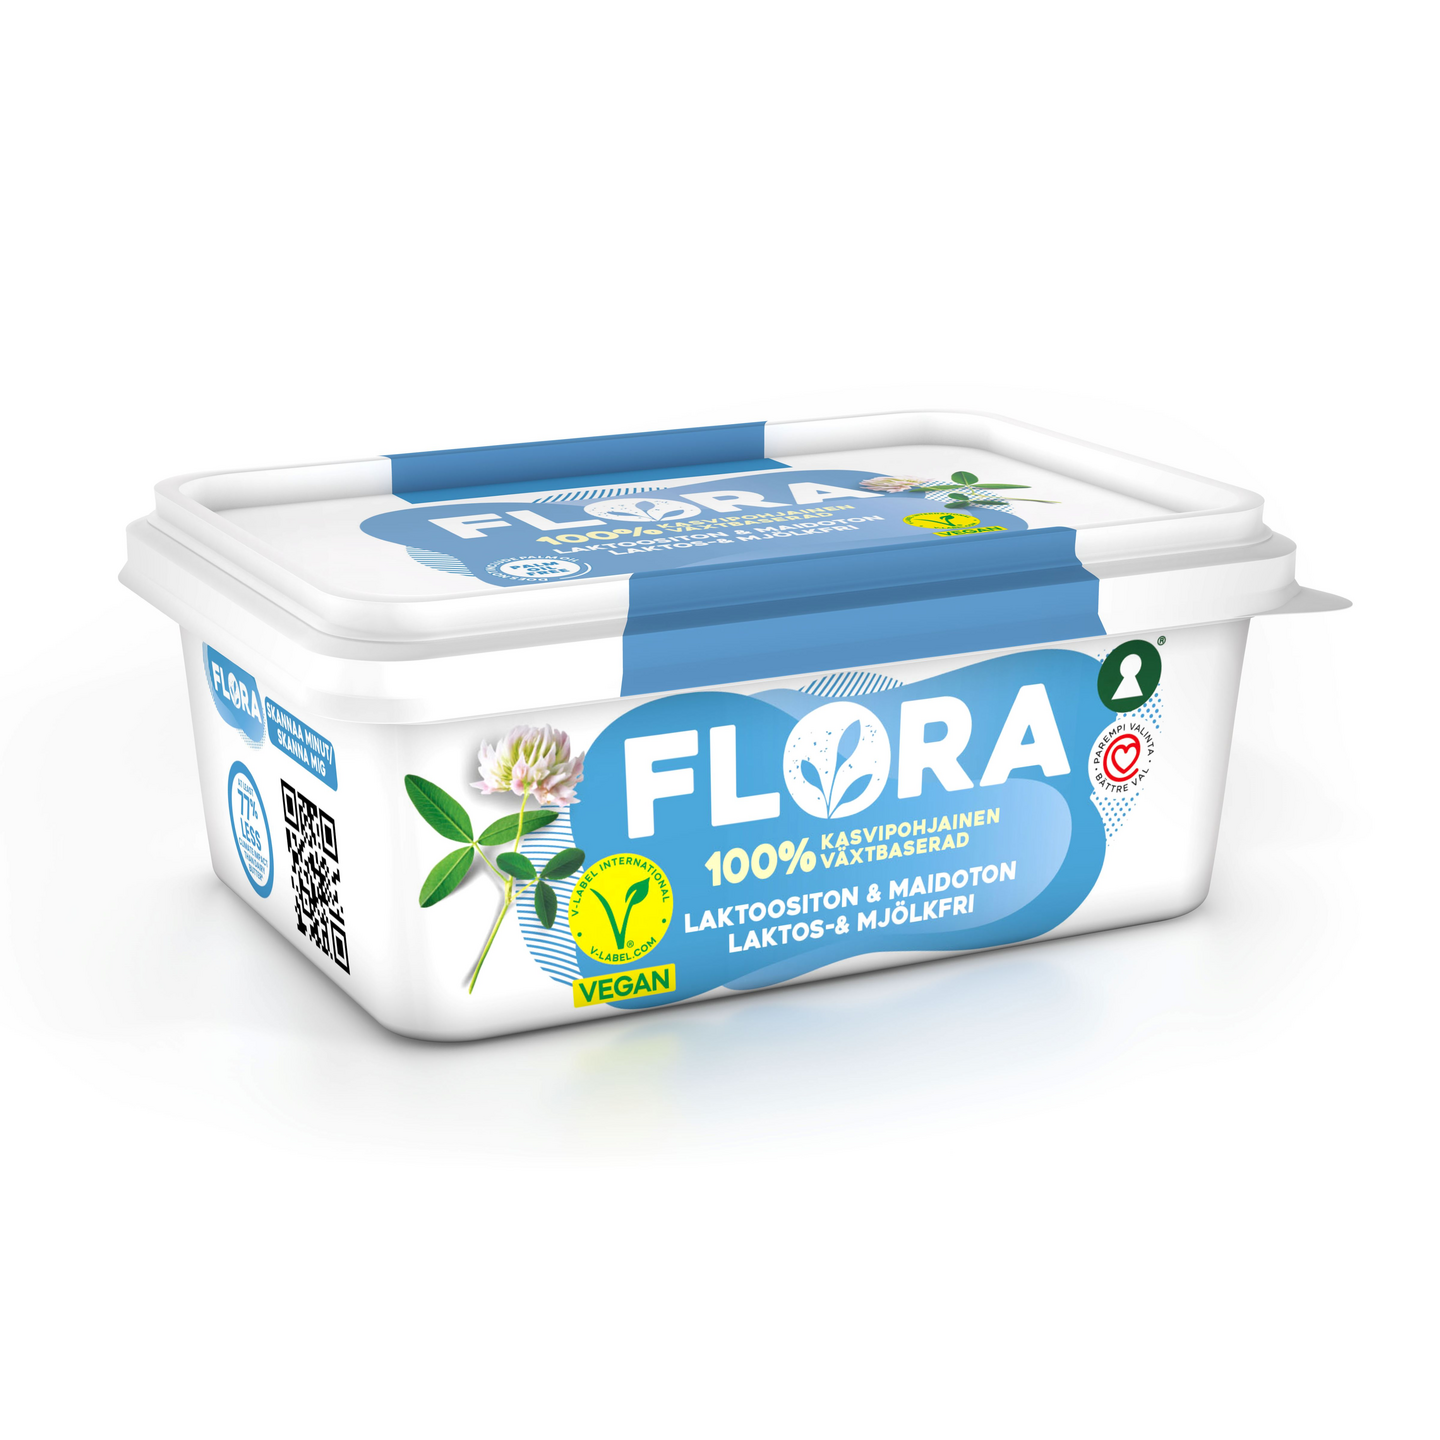 Flora margariini 400g maidoton&laktoositon